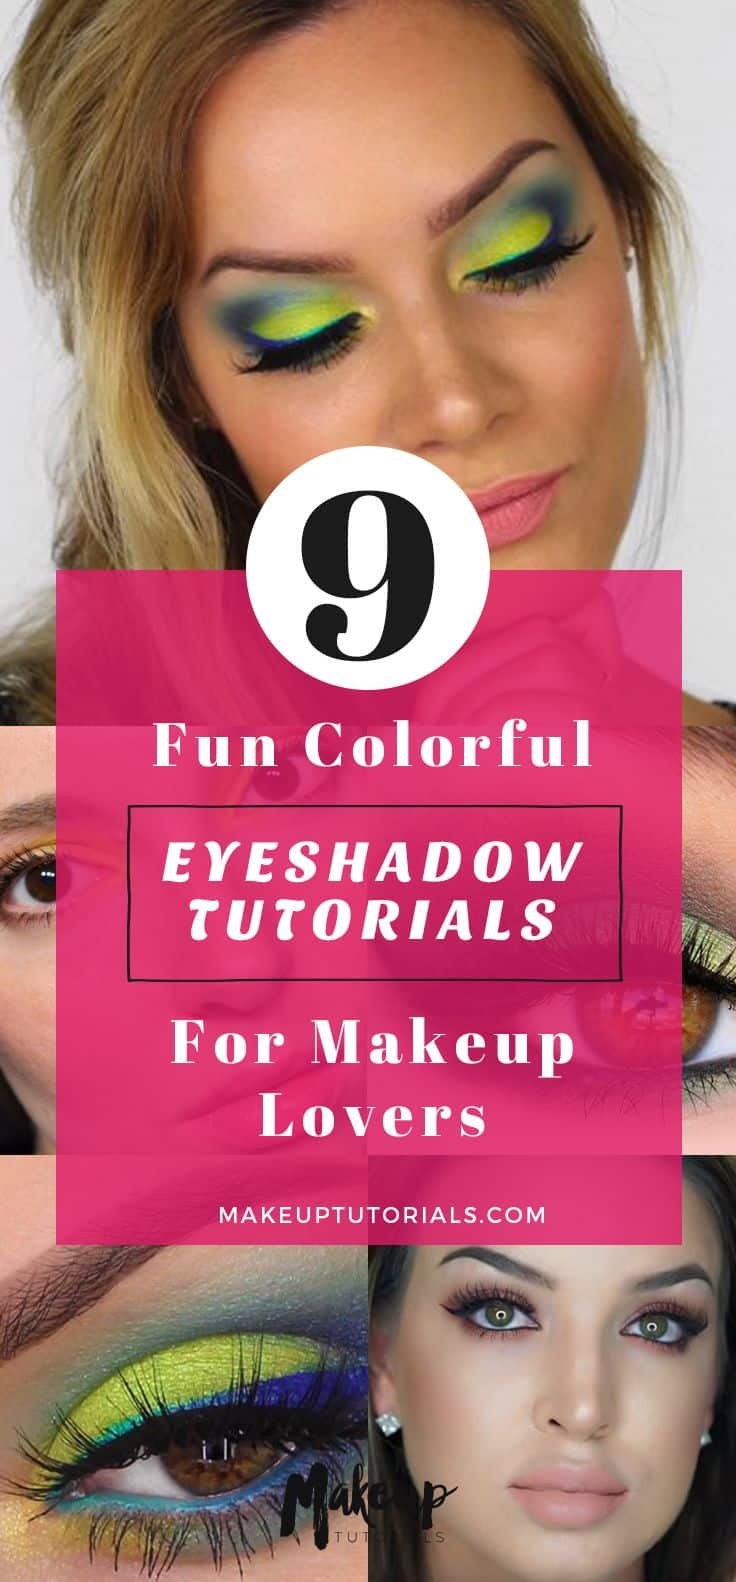 Colorful Eye Makeup 9 Fun Colorful Eyeshadow Tutorials For Makeup Lovers